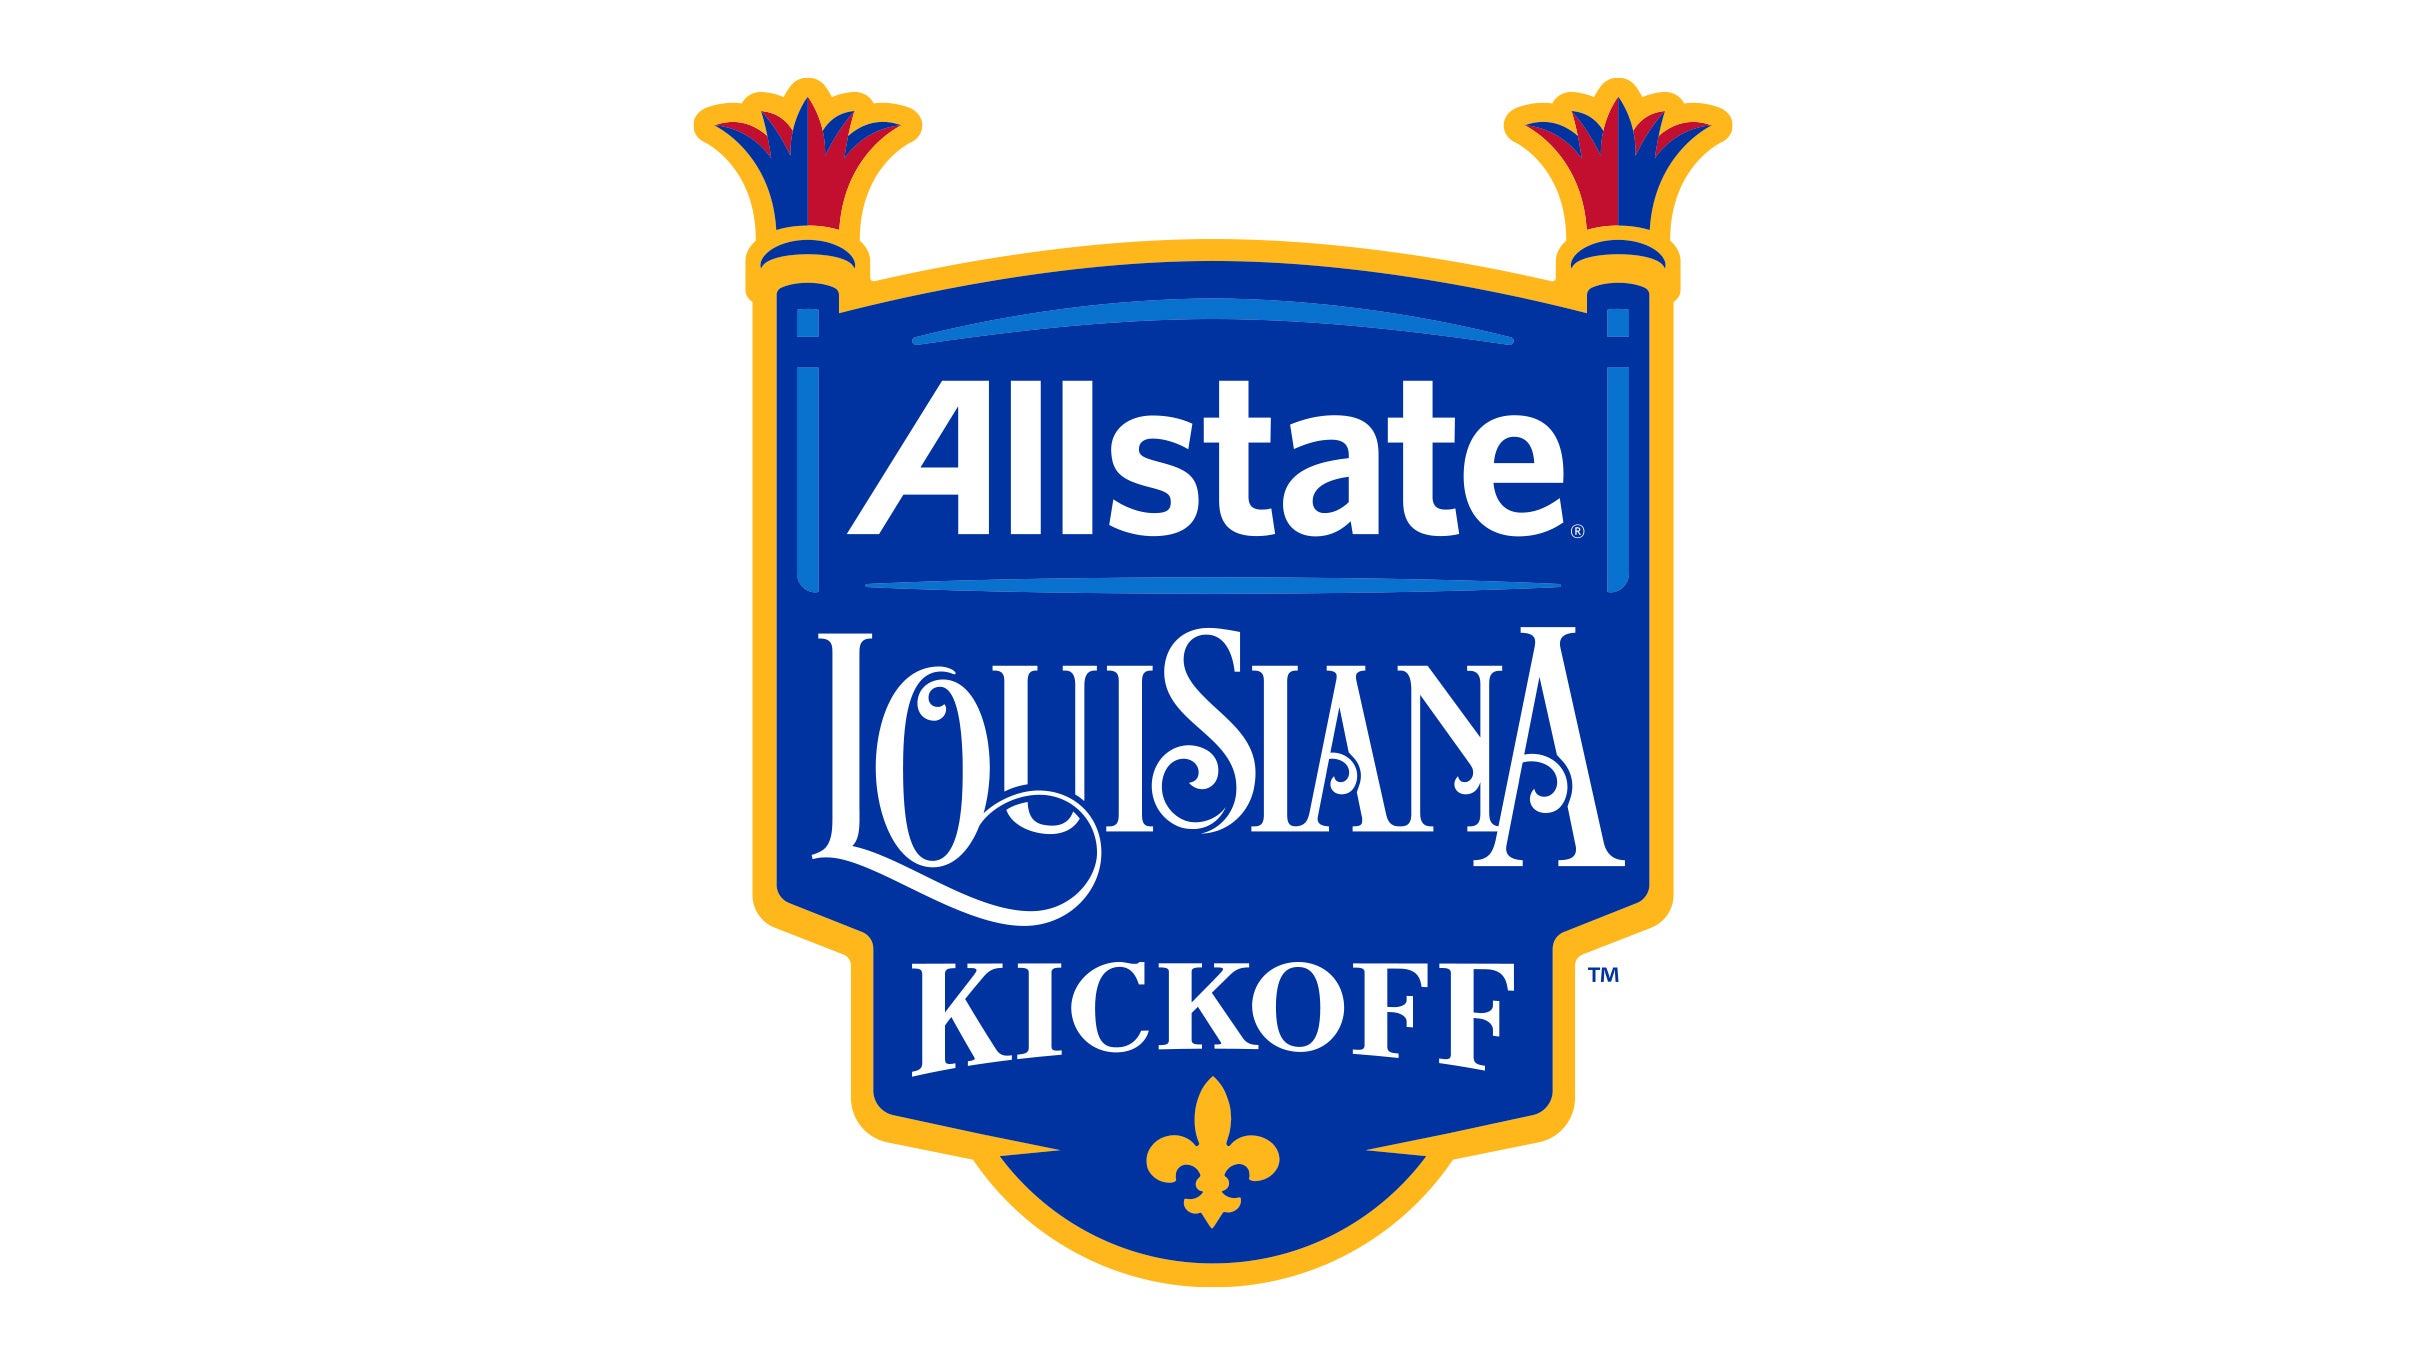 Allstate Louisiana Kickoff presale information on freepresalepasswords.com